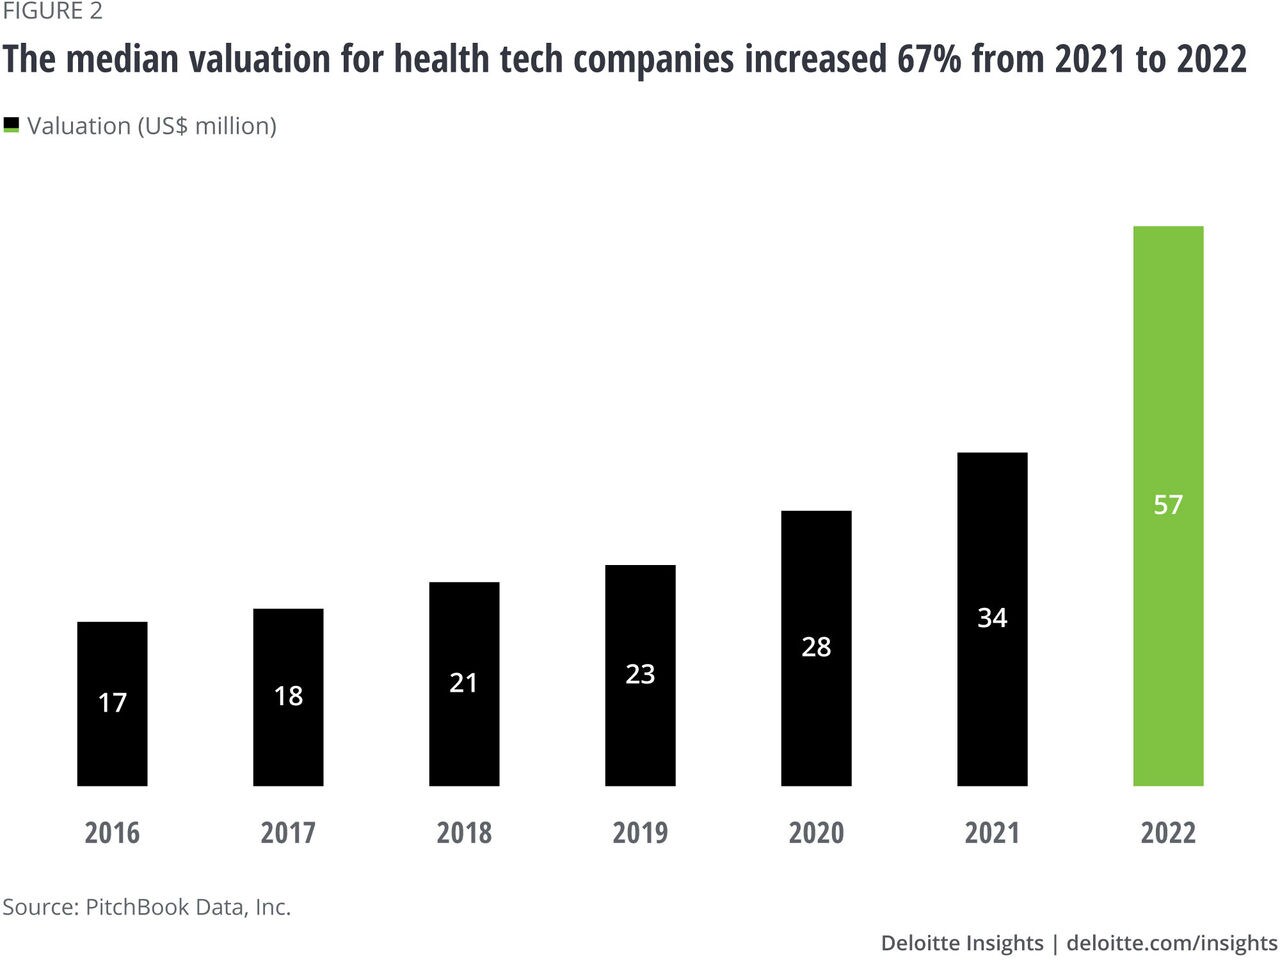 Figure 2: Median valuation of US venture capital-backed health tech companies